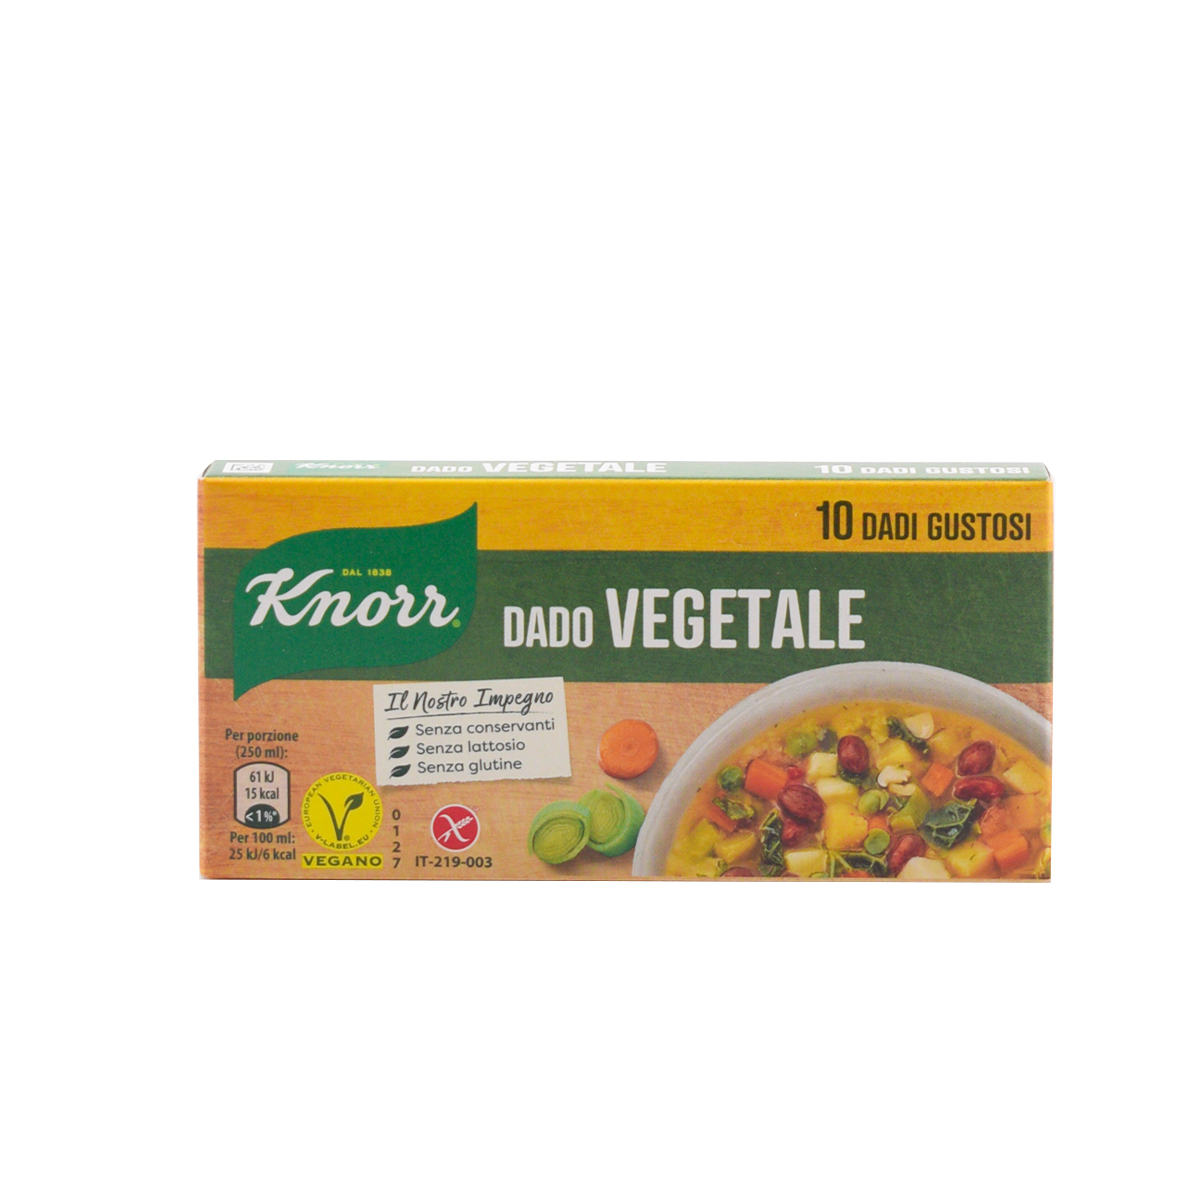 Knorr Dado Vegetale 10 dadi 100g